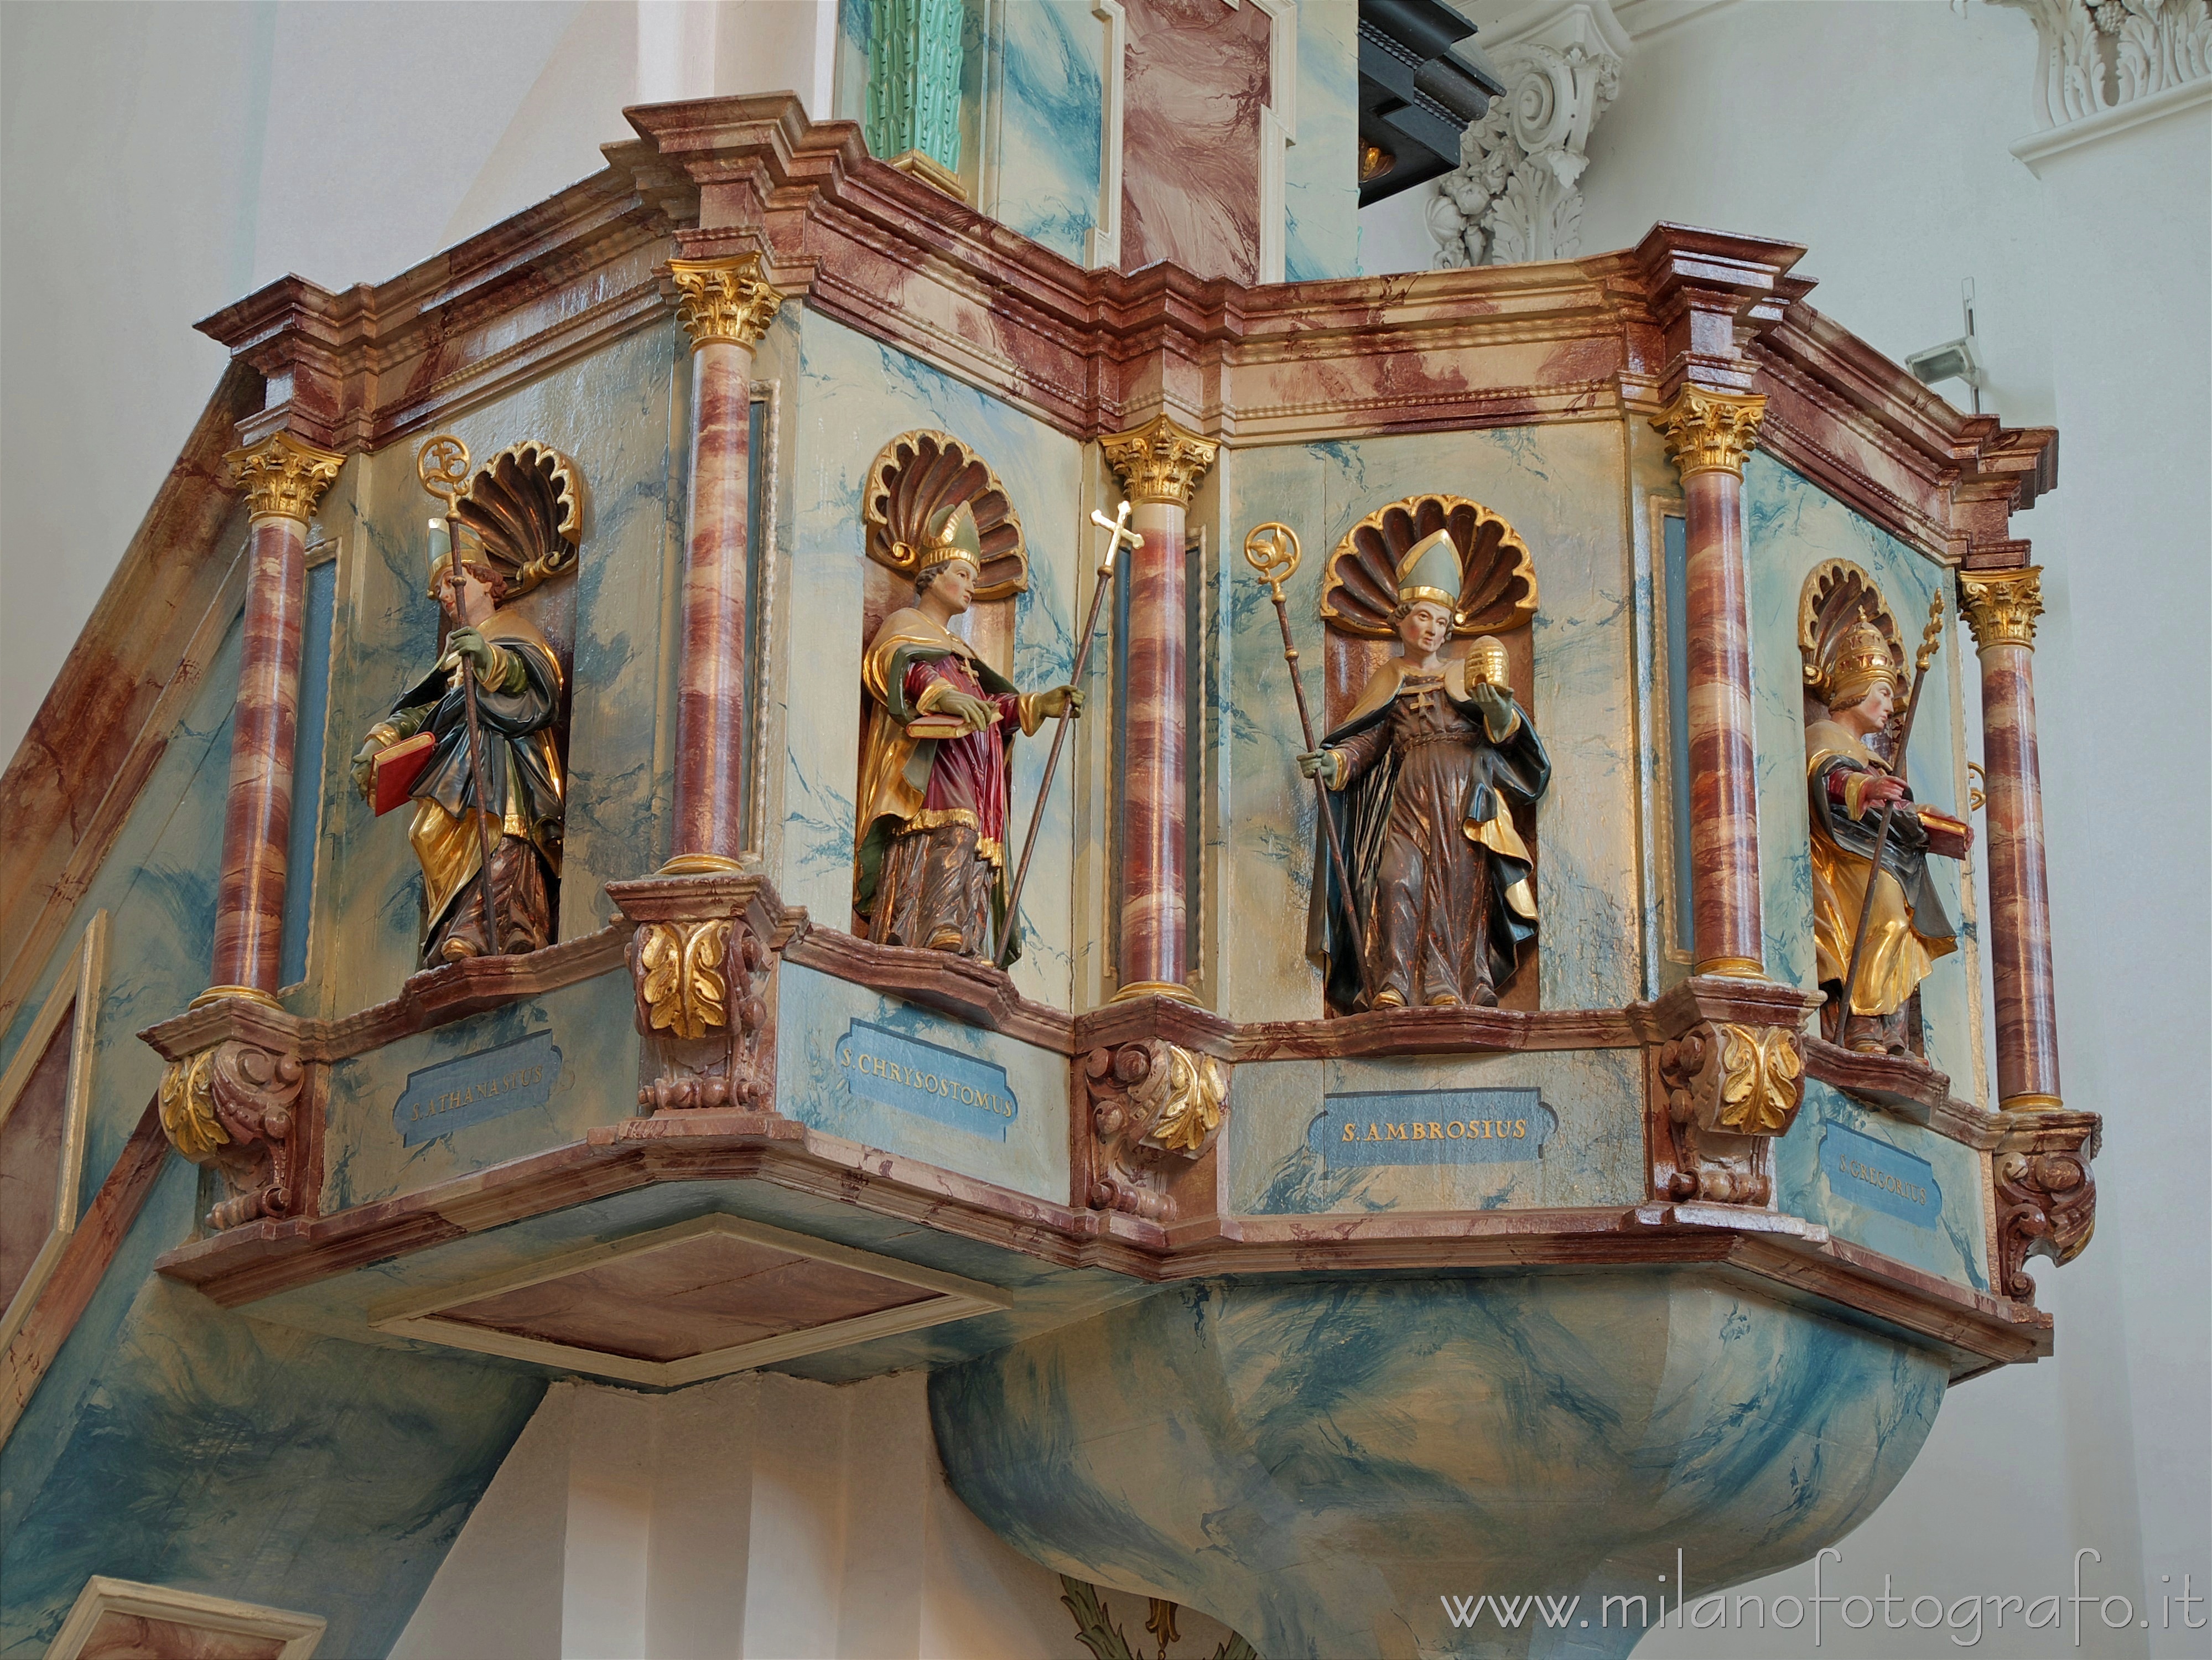 Rottenburg am Neckar (Germany): Pulpit in the church of the Sanctuary of WeggenTal - Rottenburg am Neckar (Germany)